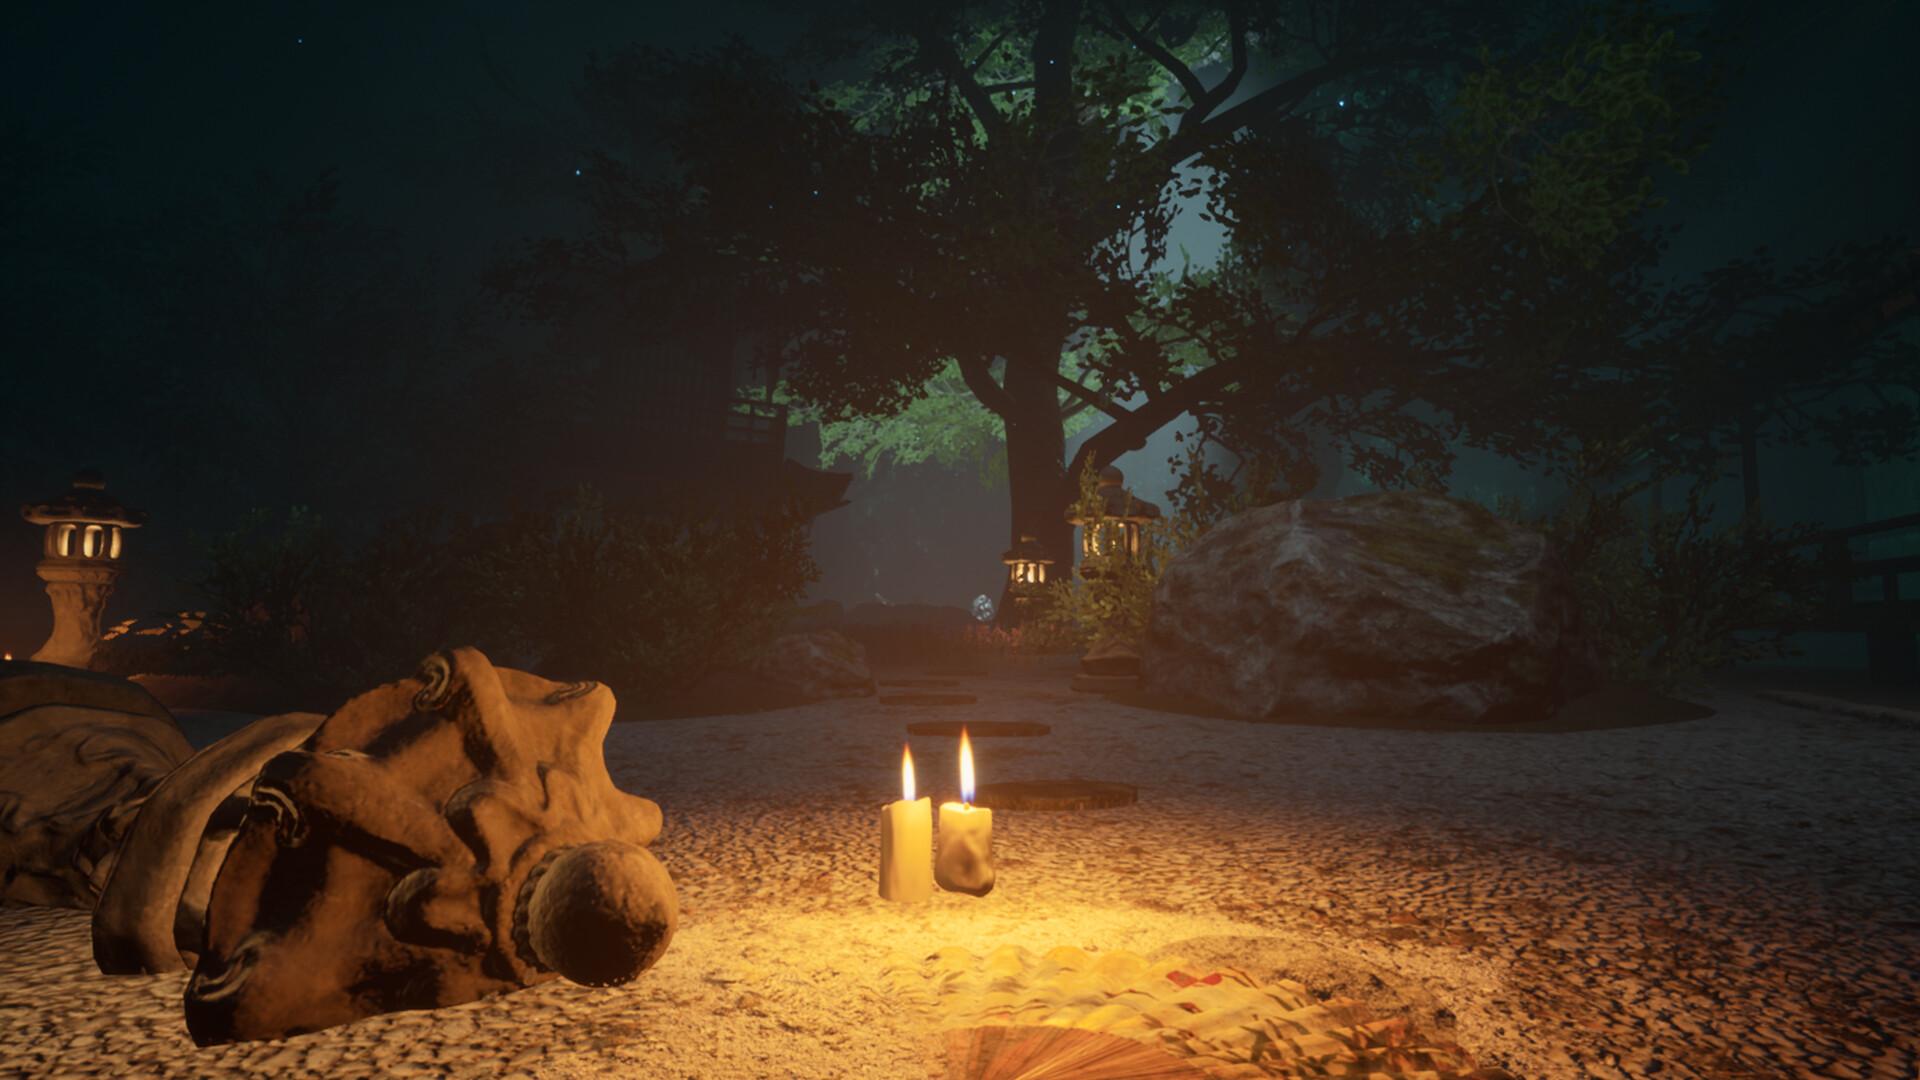 Screenshot №35 from game Malice